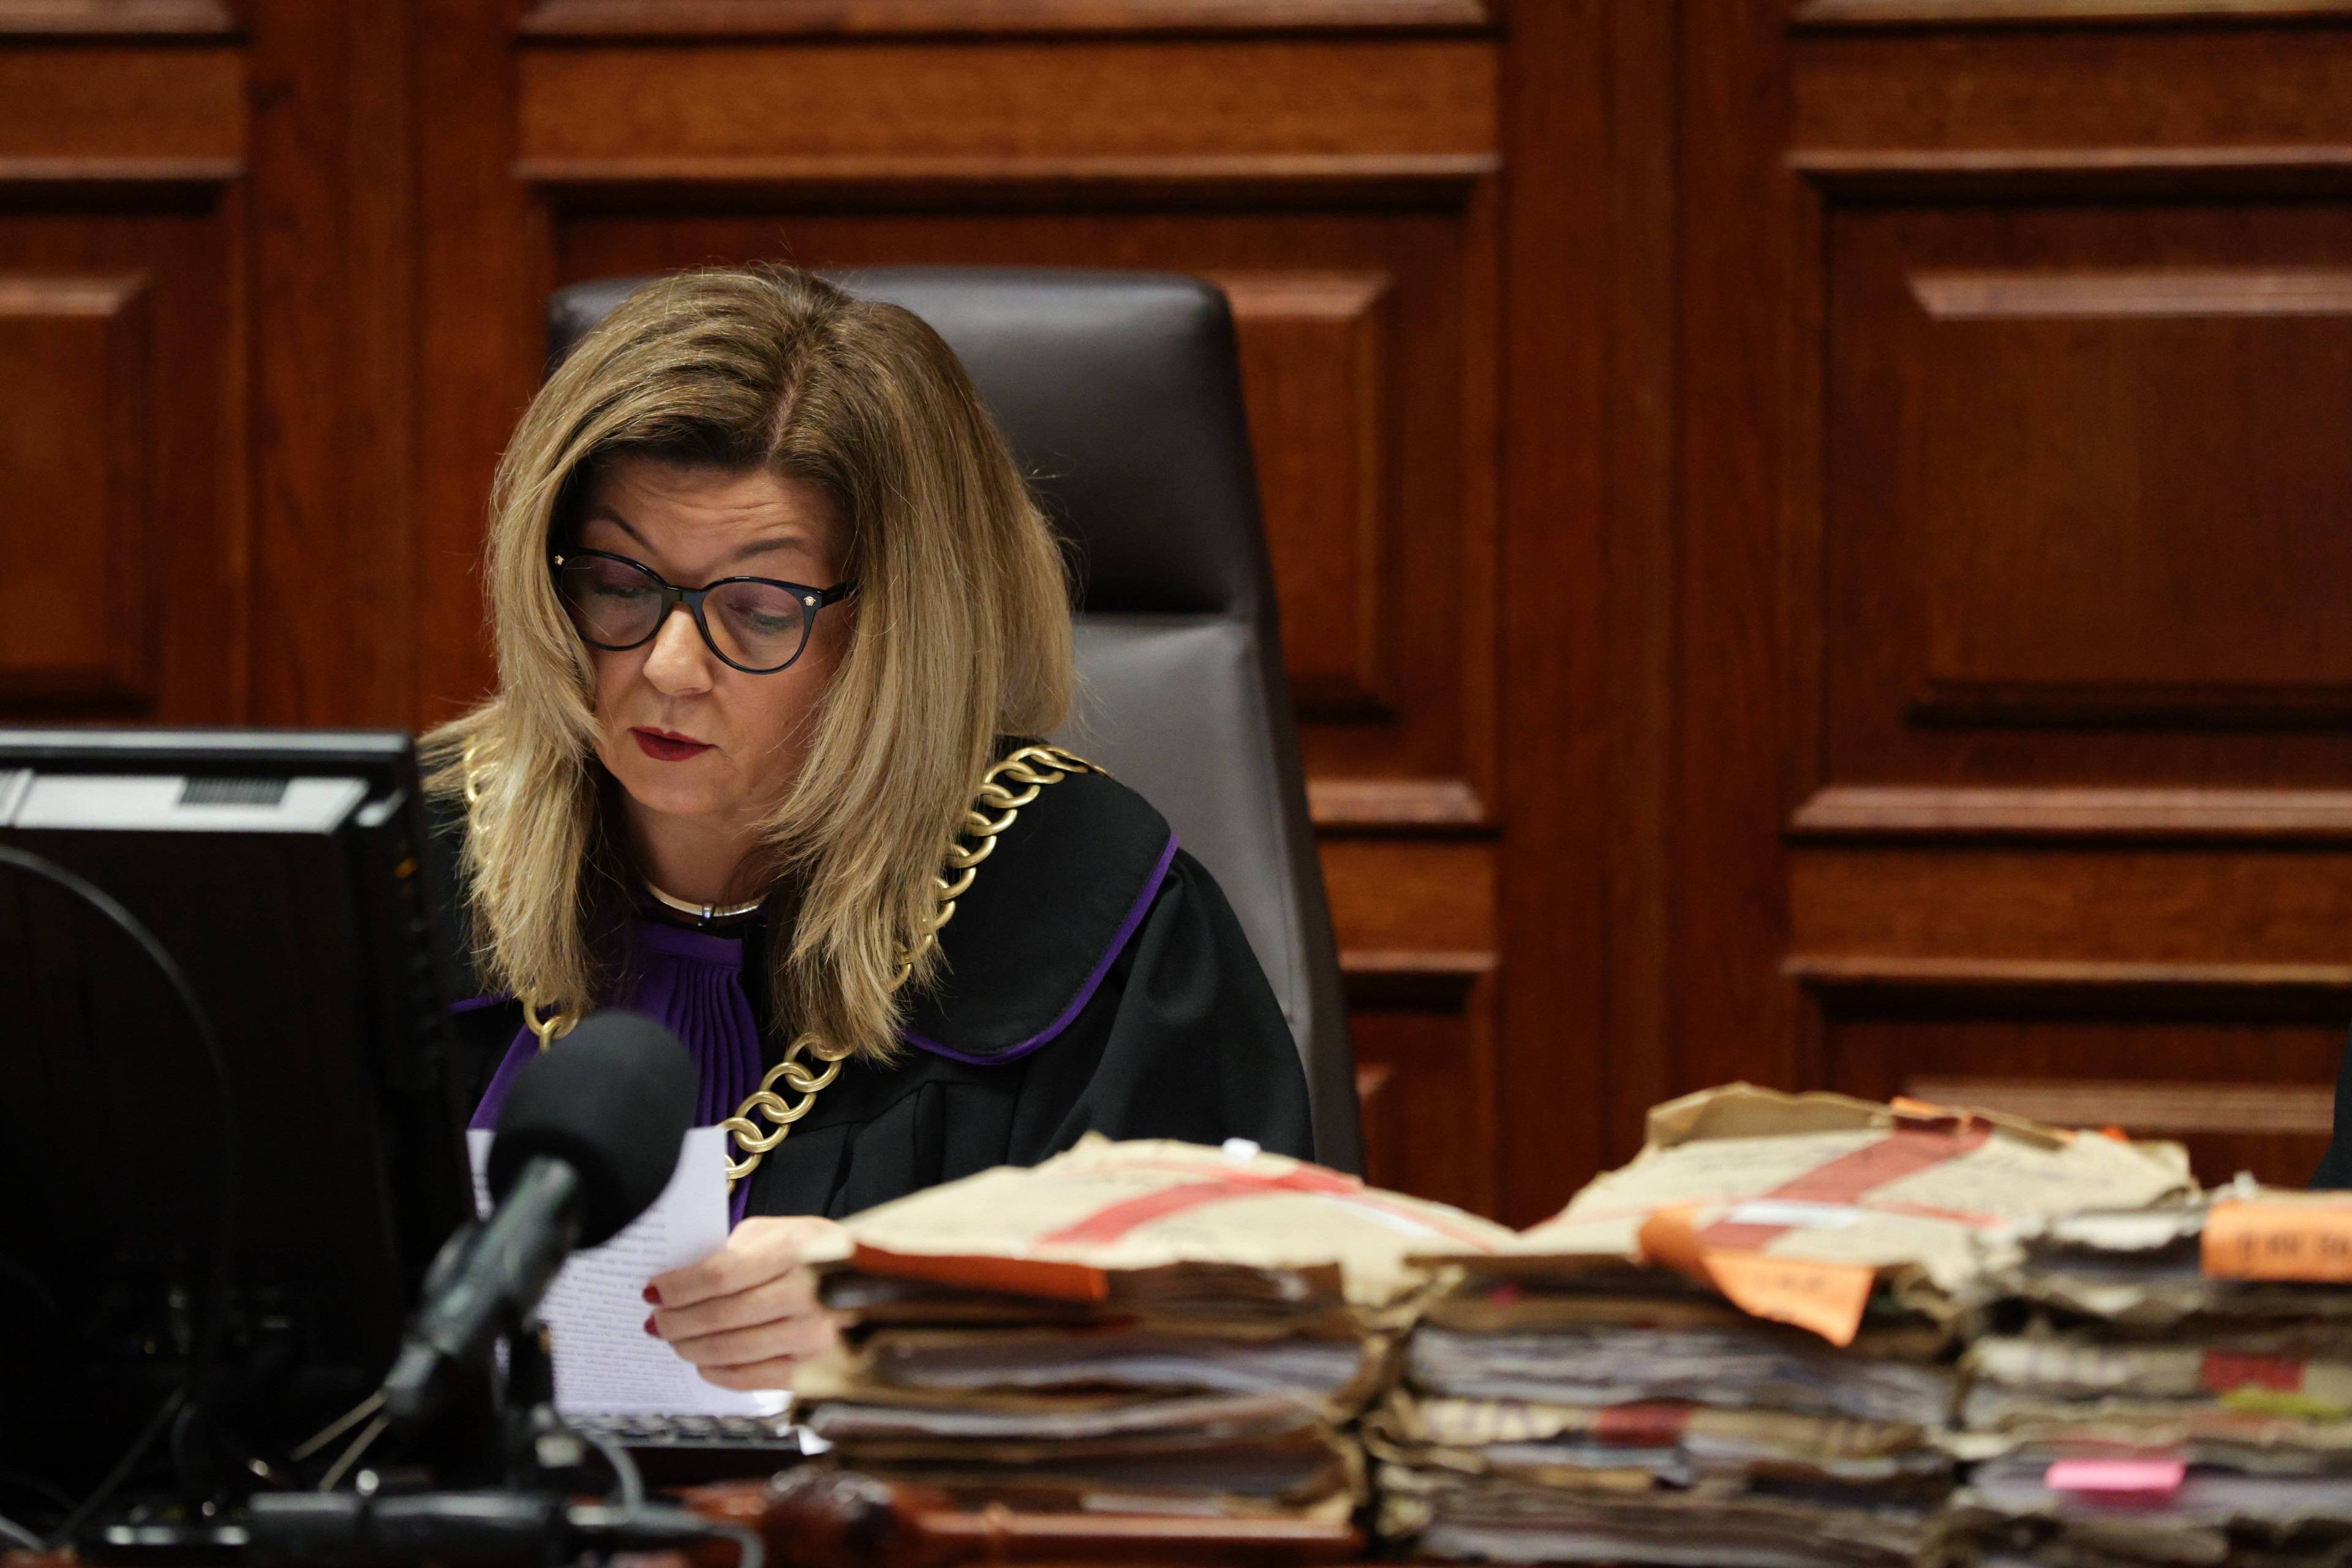 Sędzia Anna Bator-Ciesielska odczytuje wyrok za stołem, na którym leżą akta.